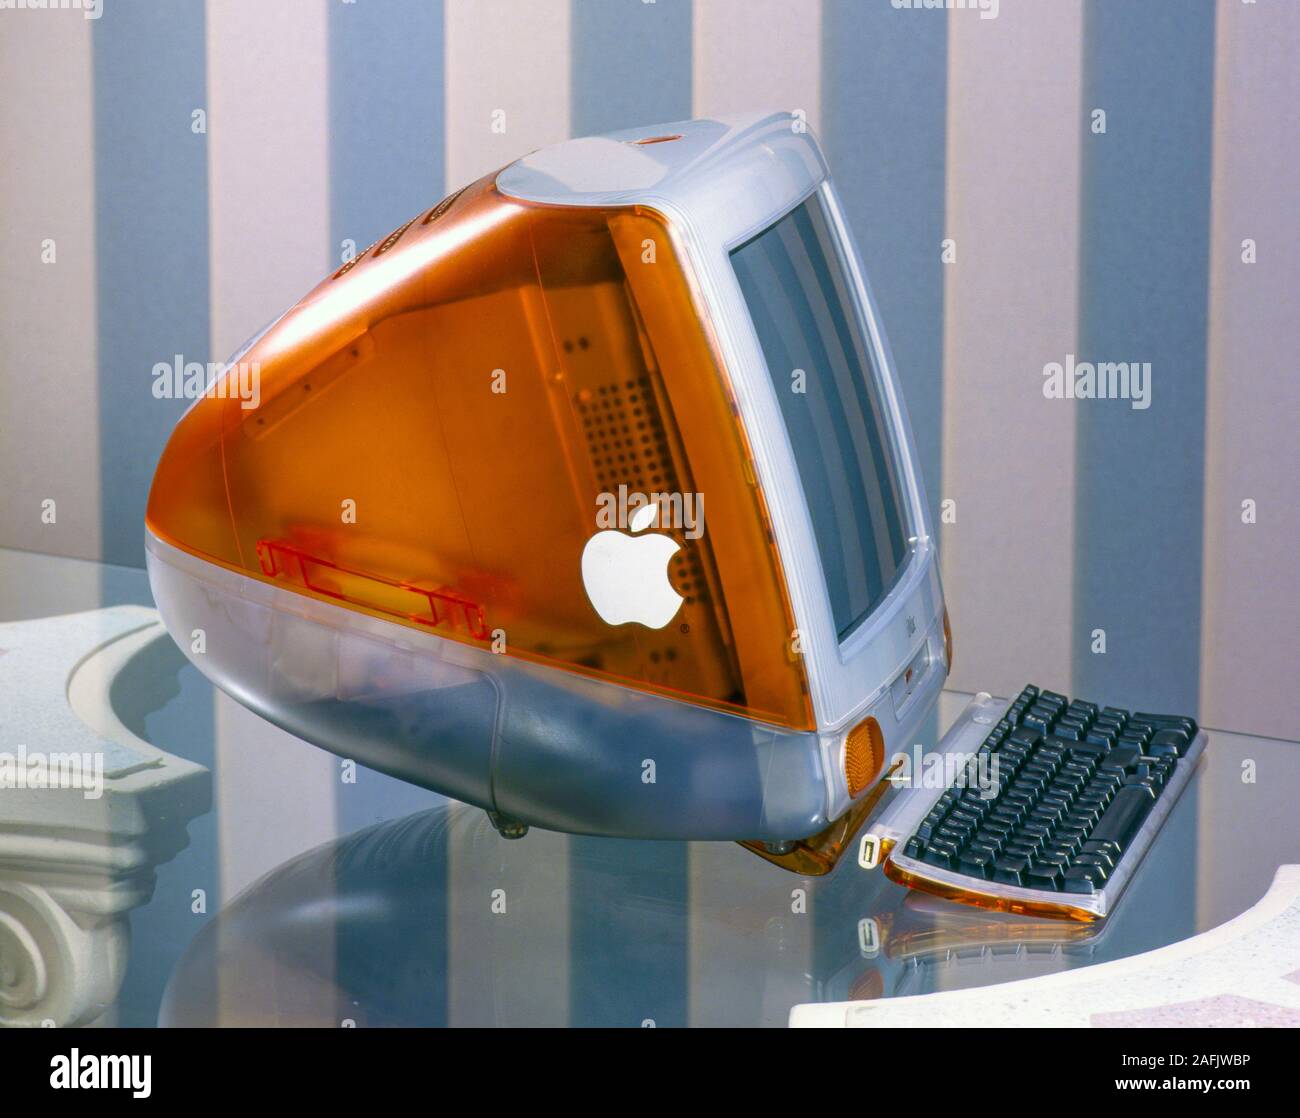 Computer Mac Imac G3 Tangerine 1998 Stock Photo - Alamy